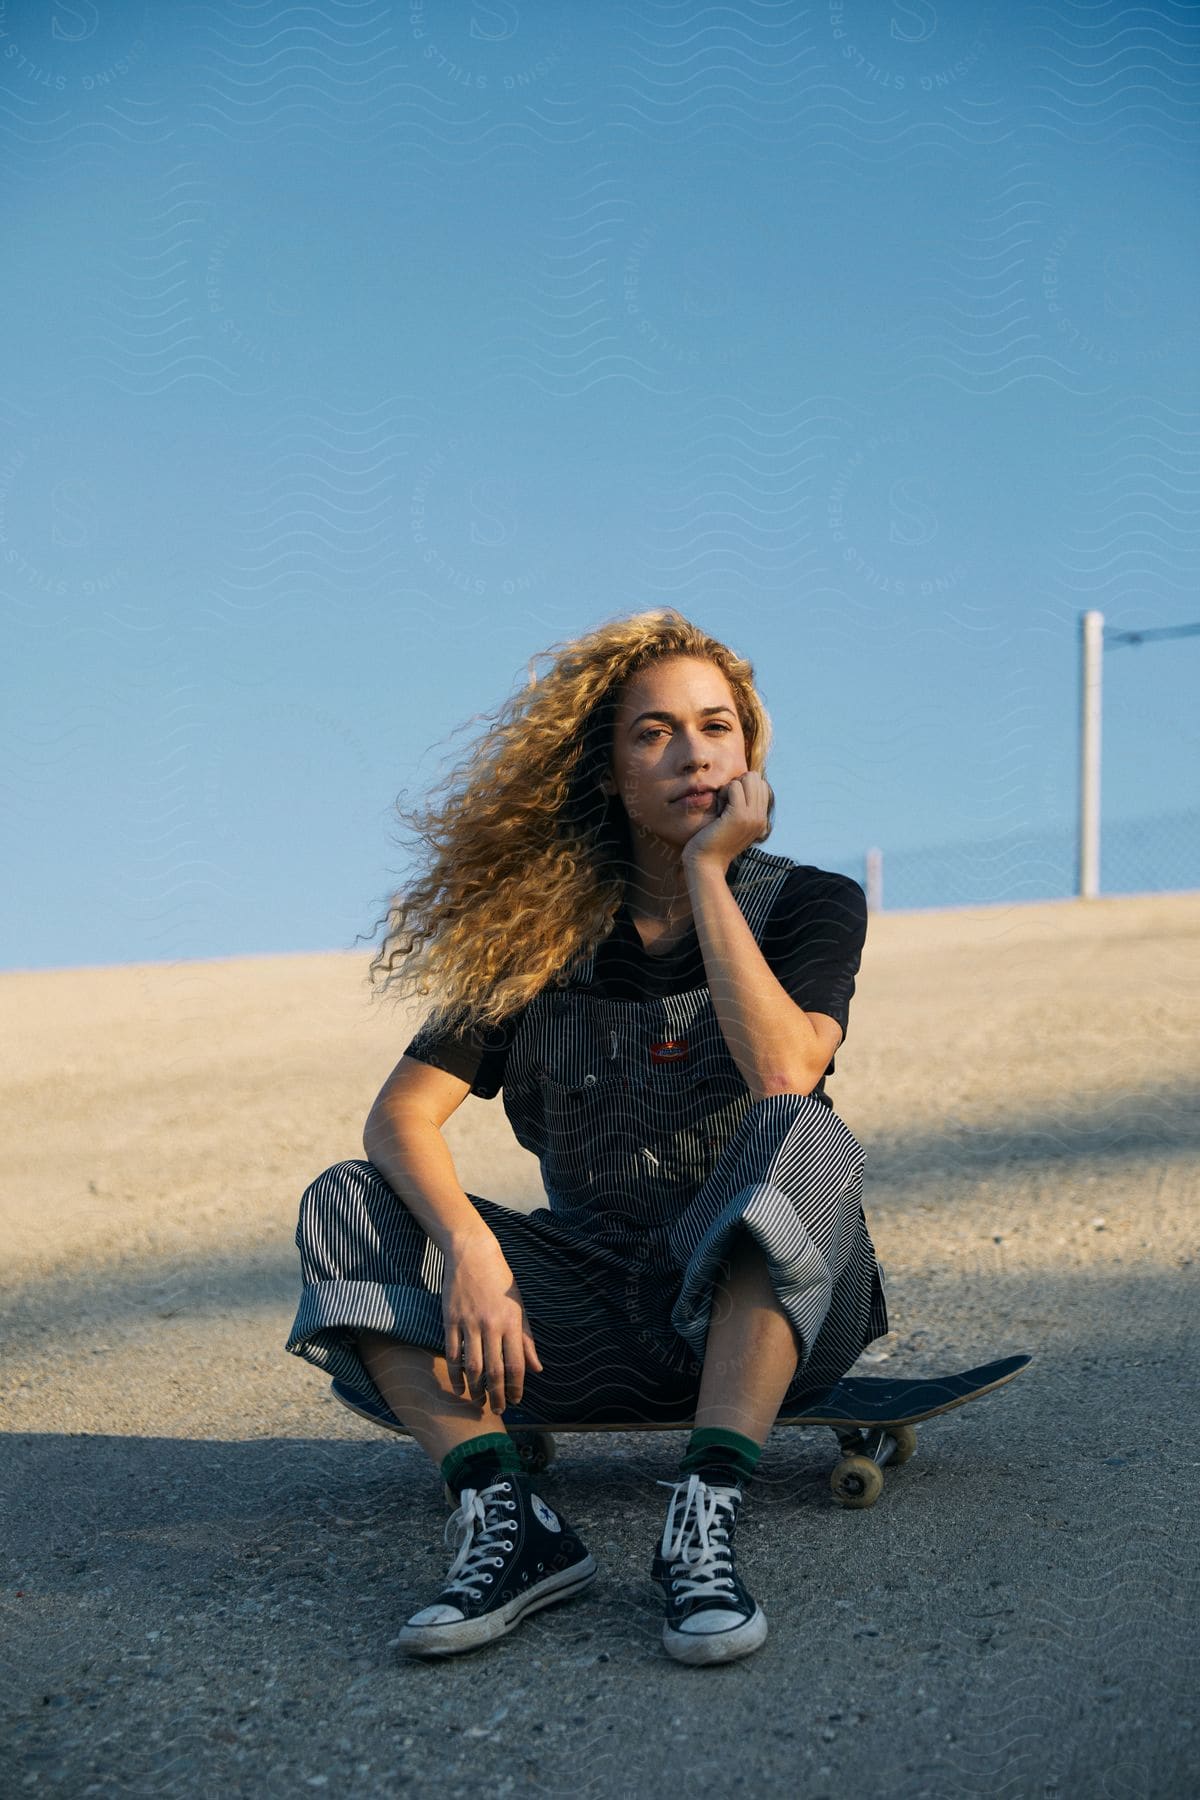 Teen girl skateboarder sits on skateboard chin on hand windblown curly hair black tshirt pinstripe overalls black converse hightops